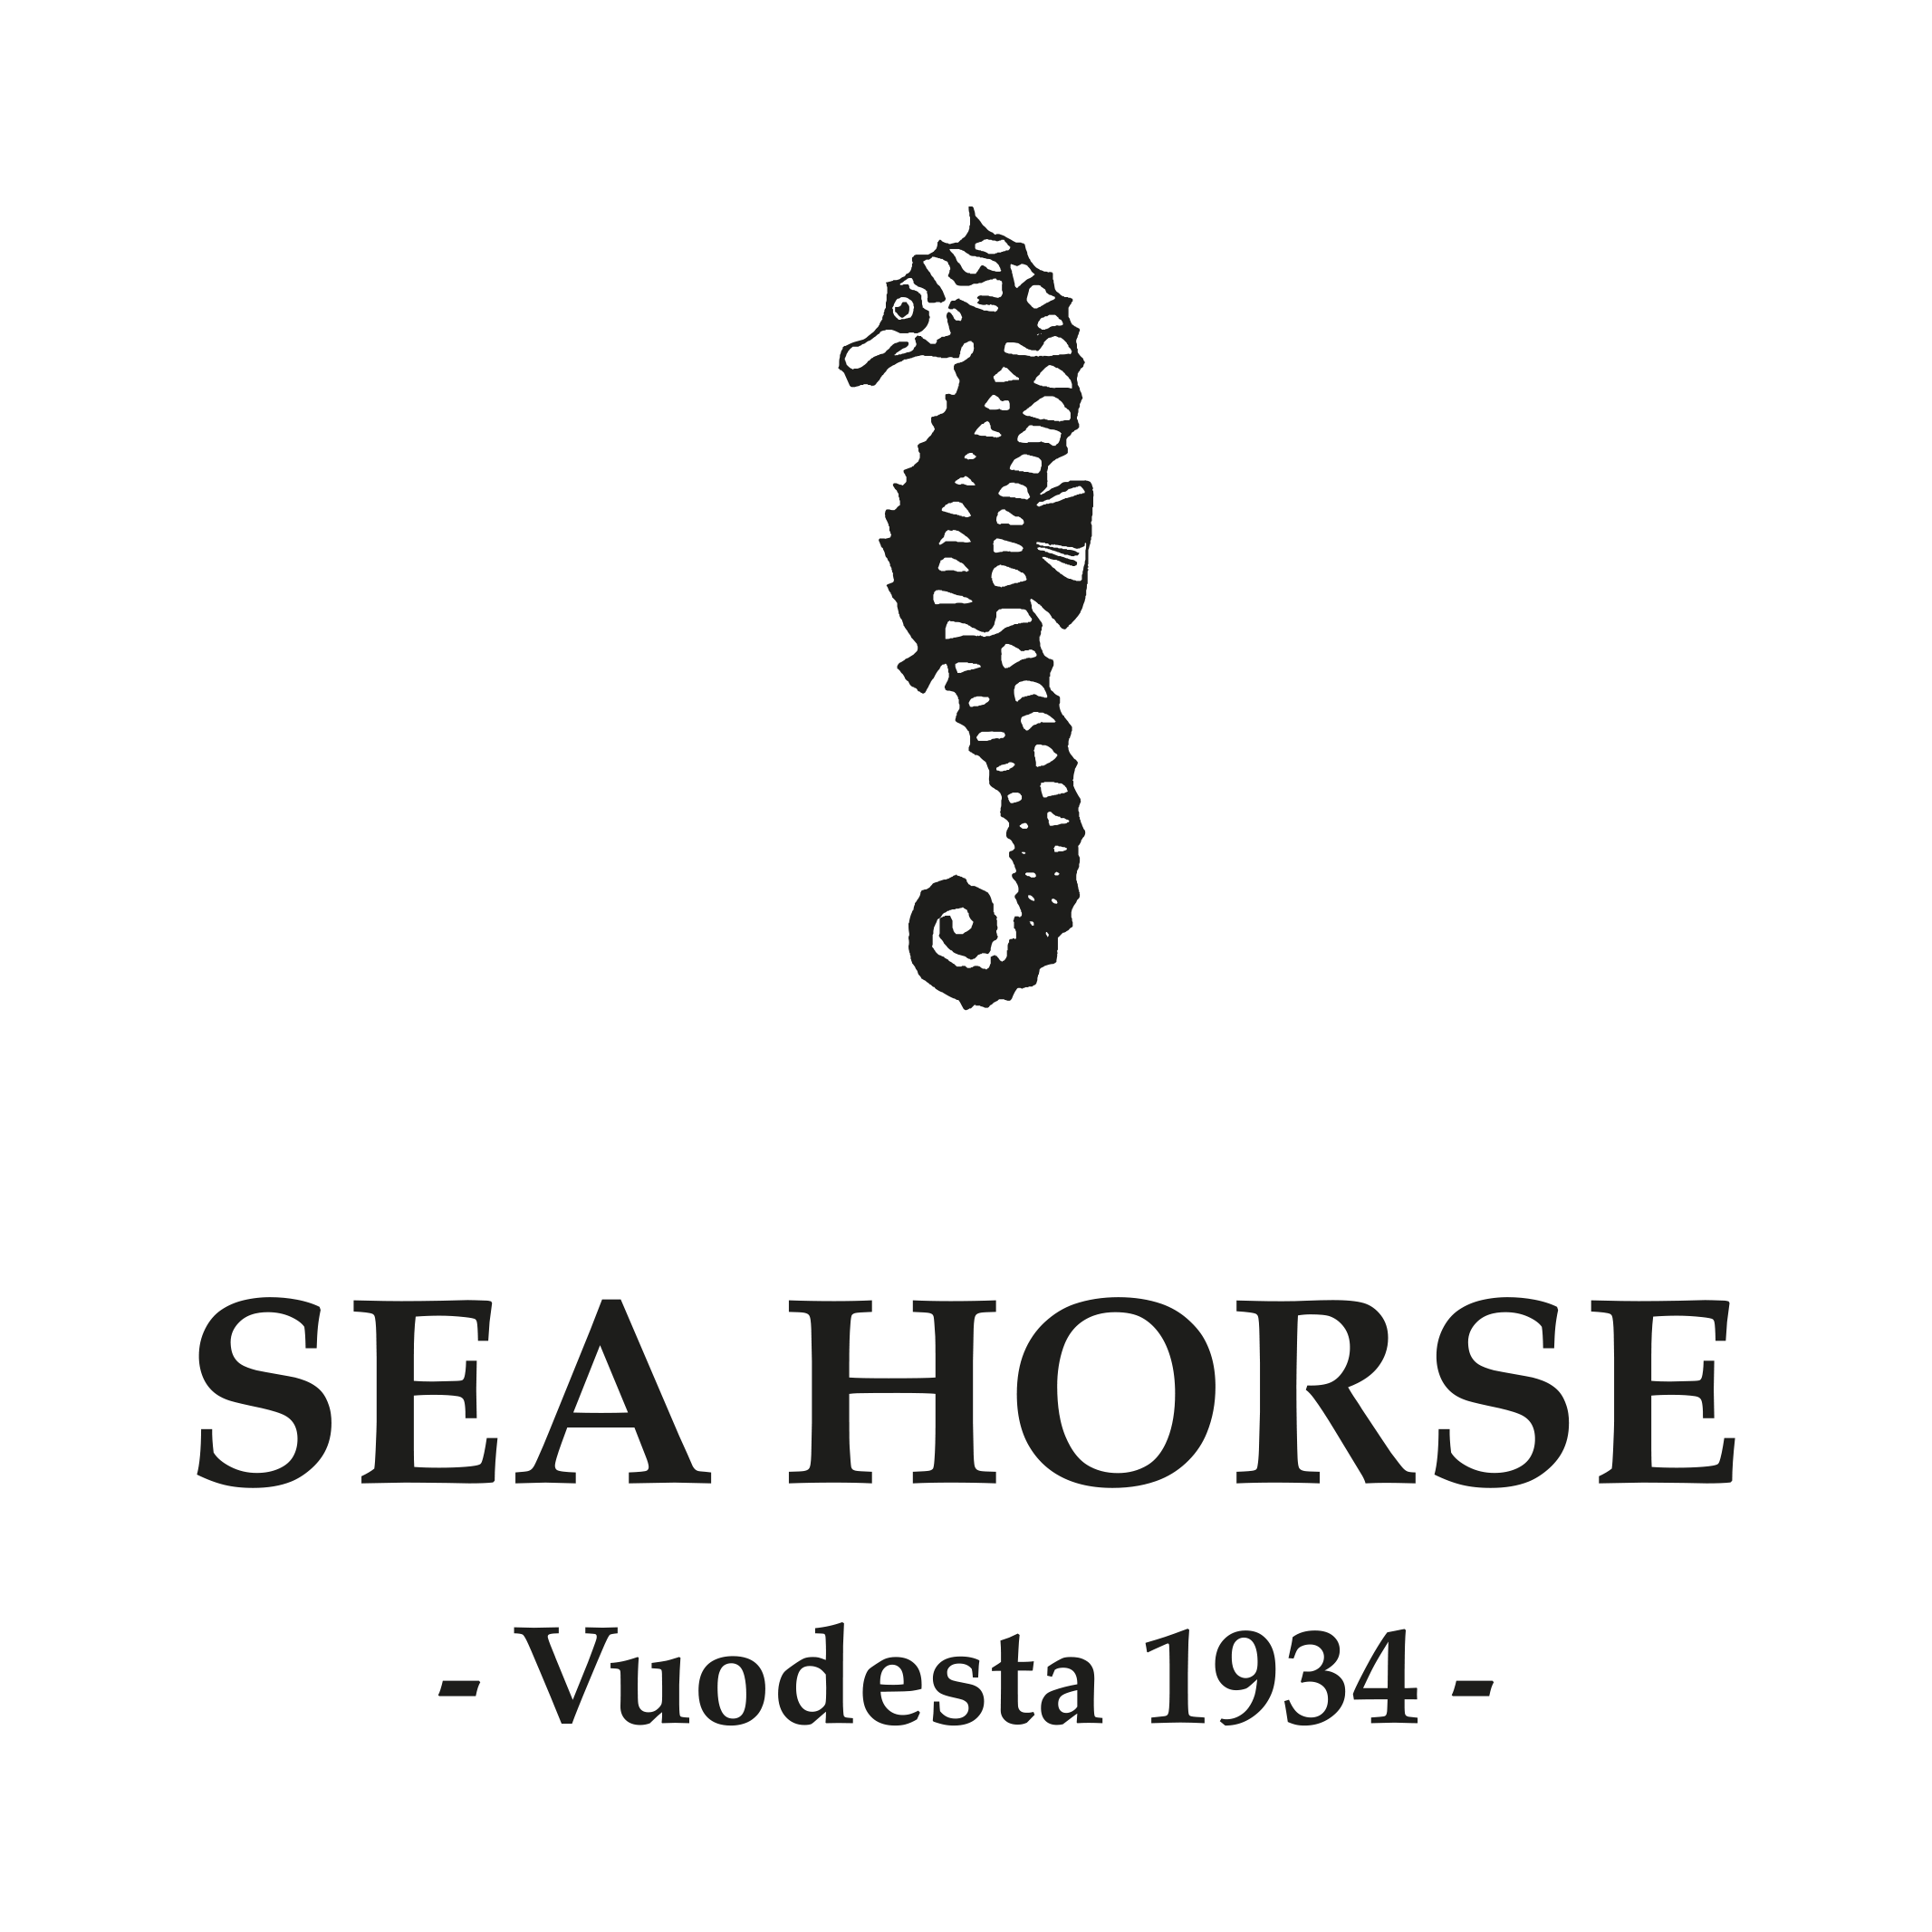 Sea Horse Oy